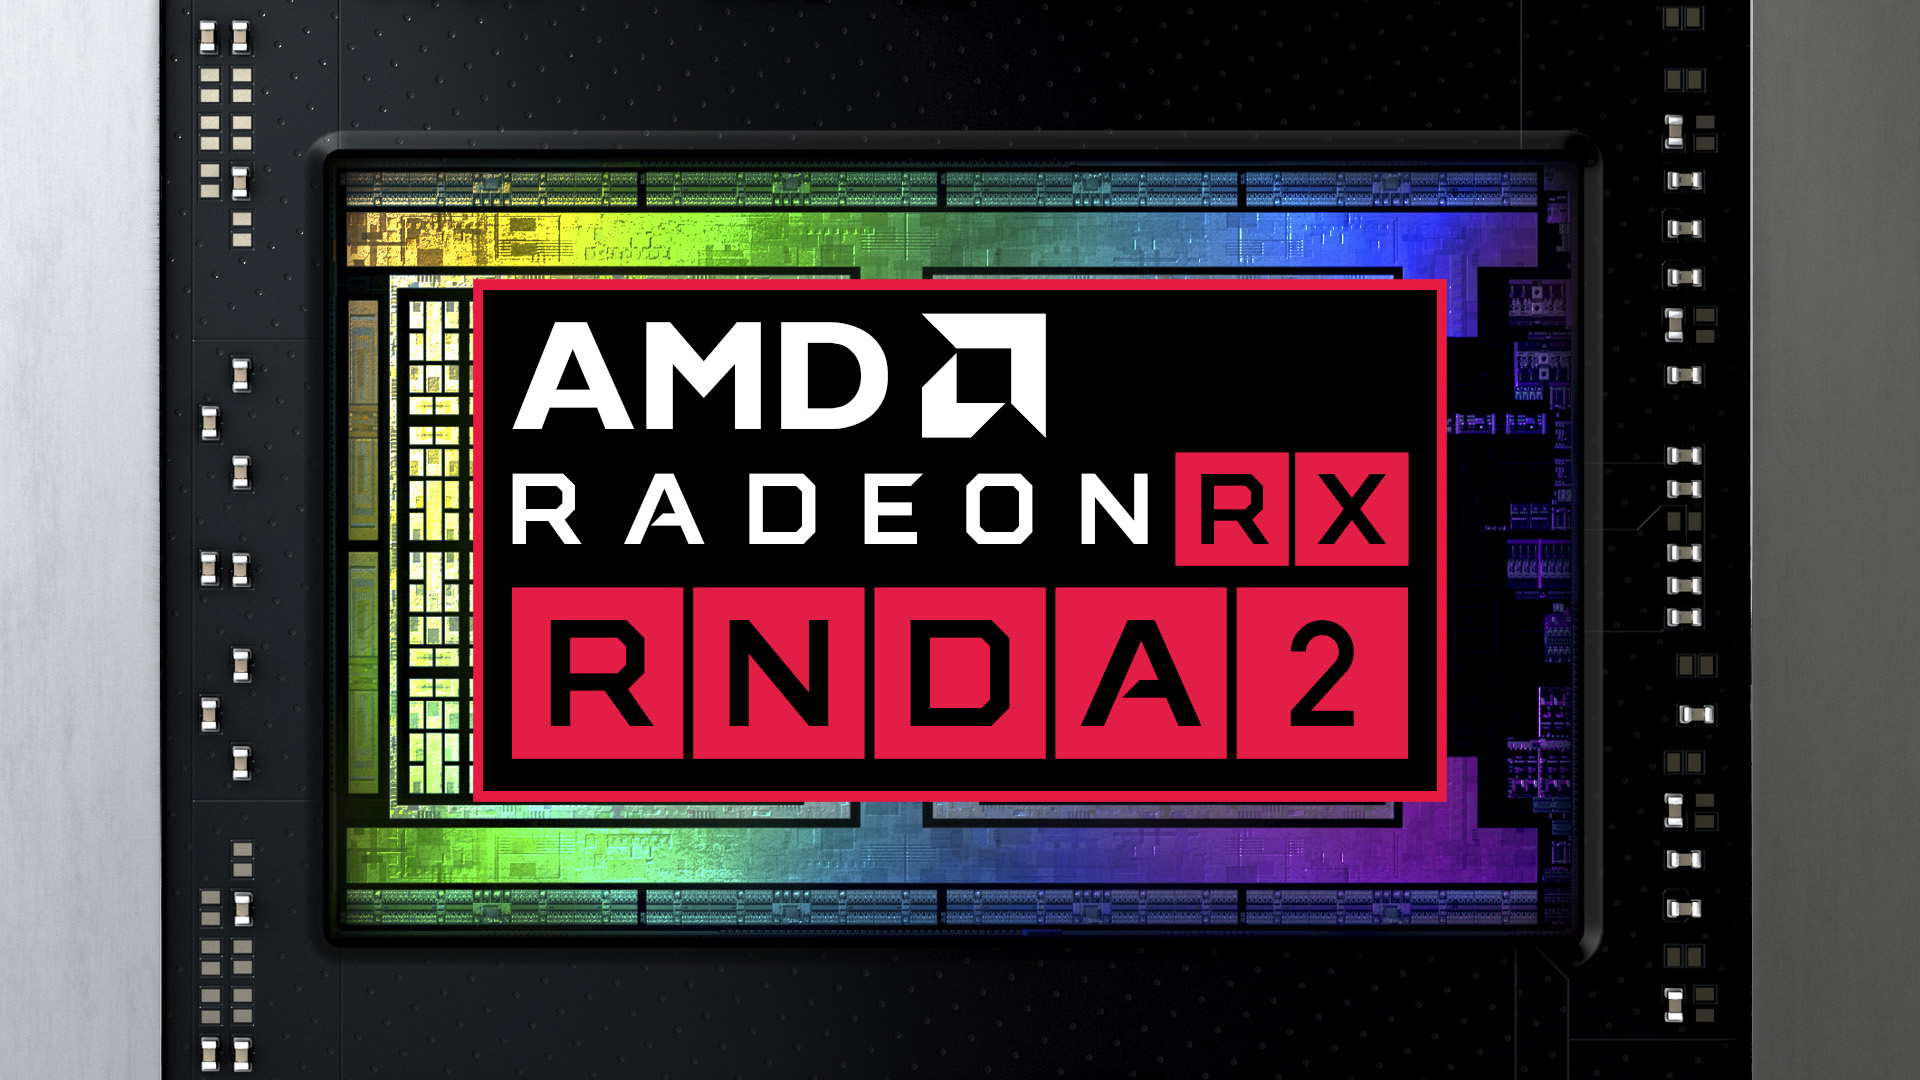 『BigNavi / RDNA2』Radeon RX 6000シリーズの最新情報まとめ